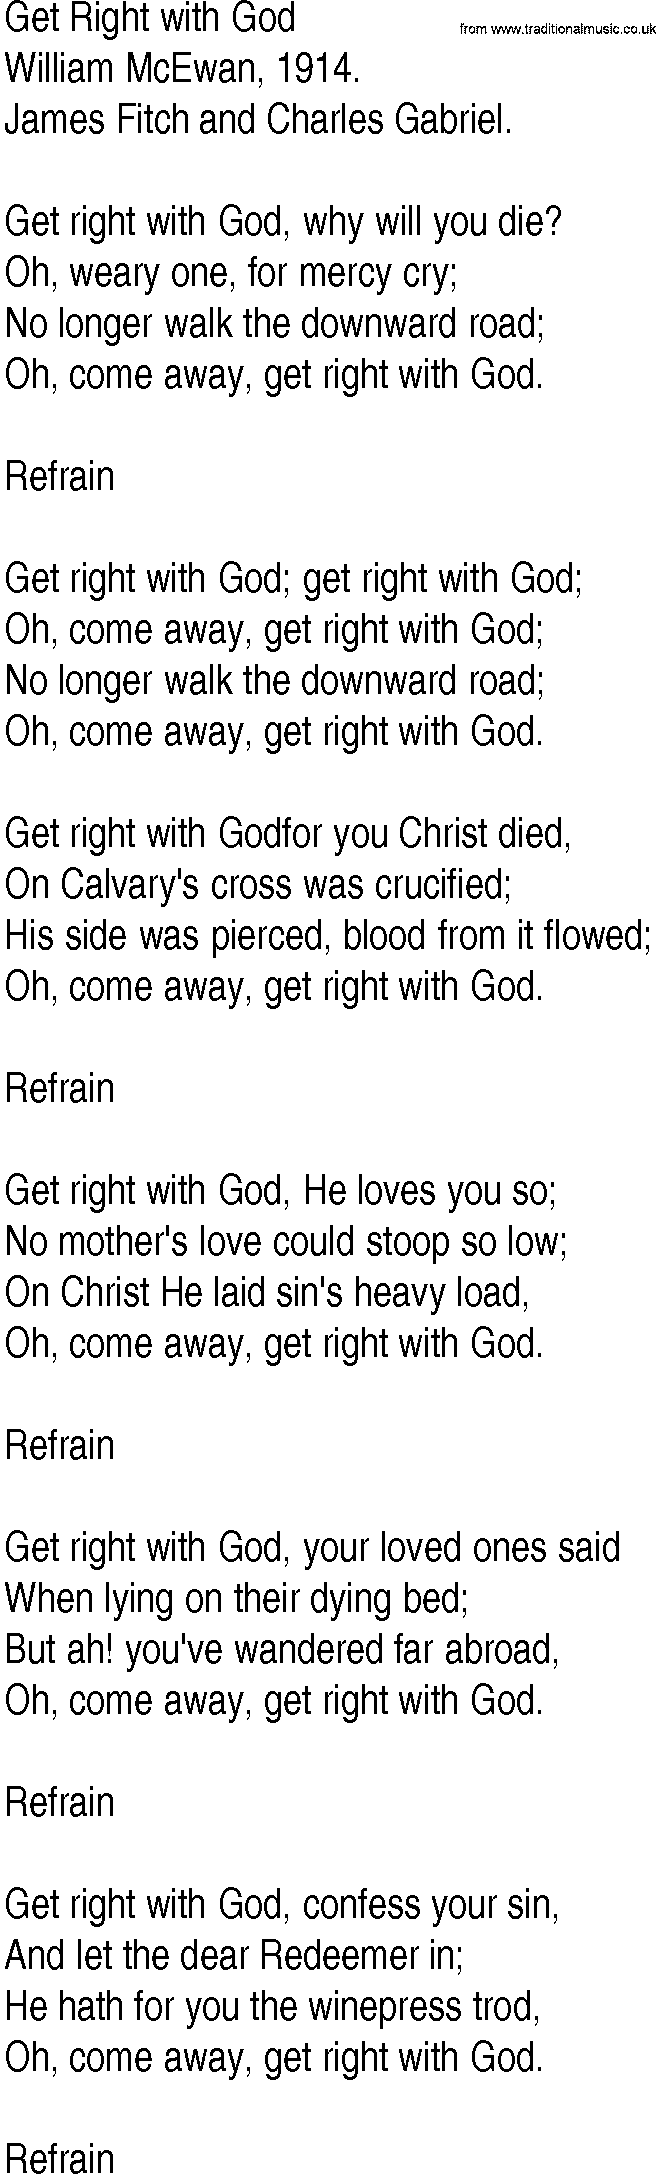 Hymn and Gospel Song: Get Right with God by William McEwan lyrics